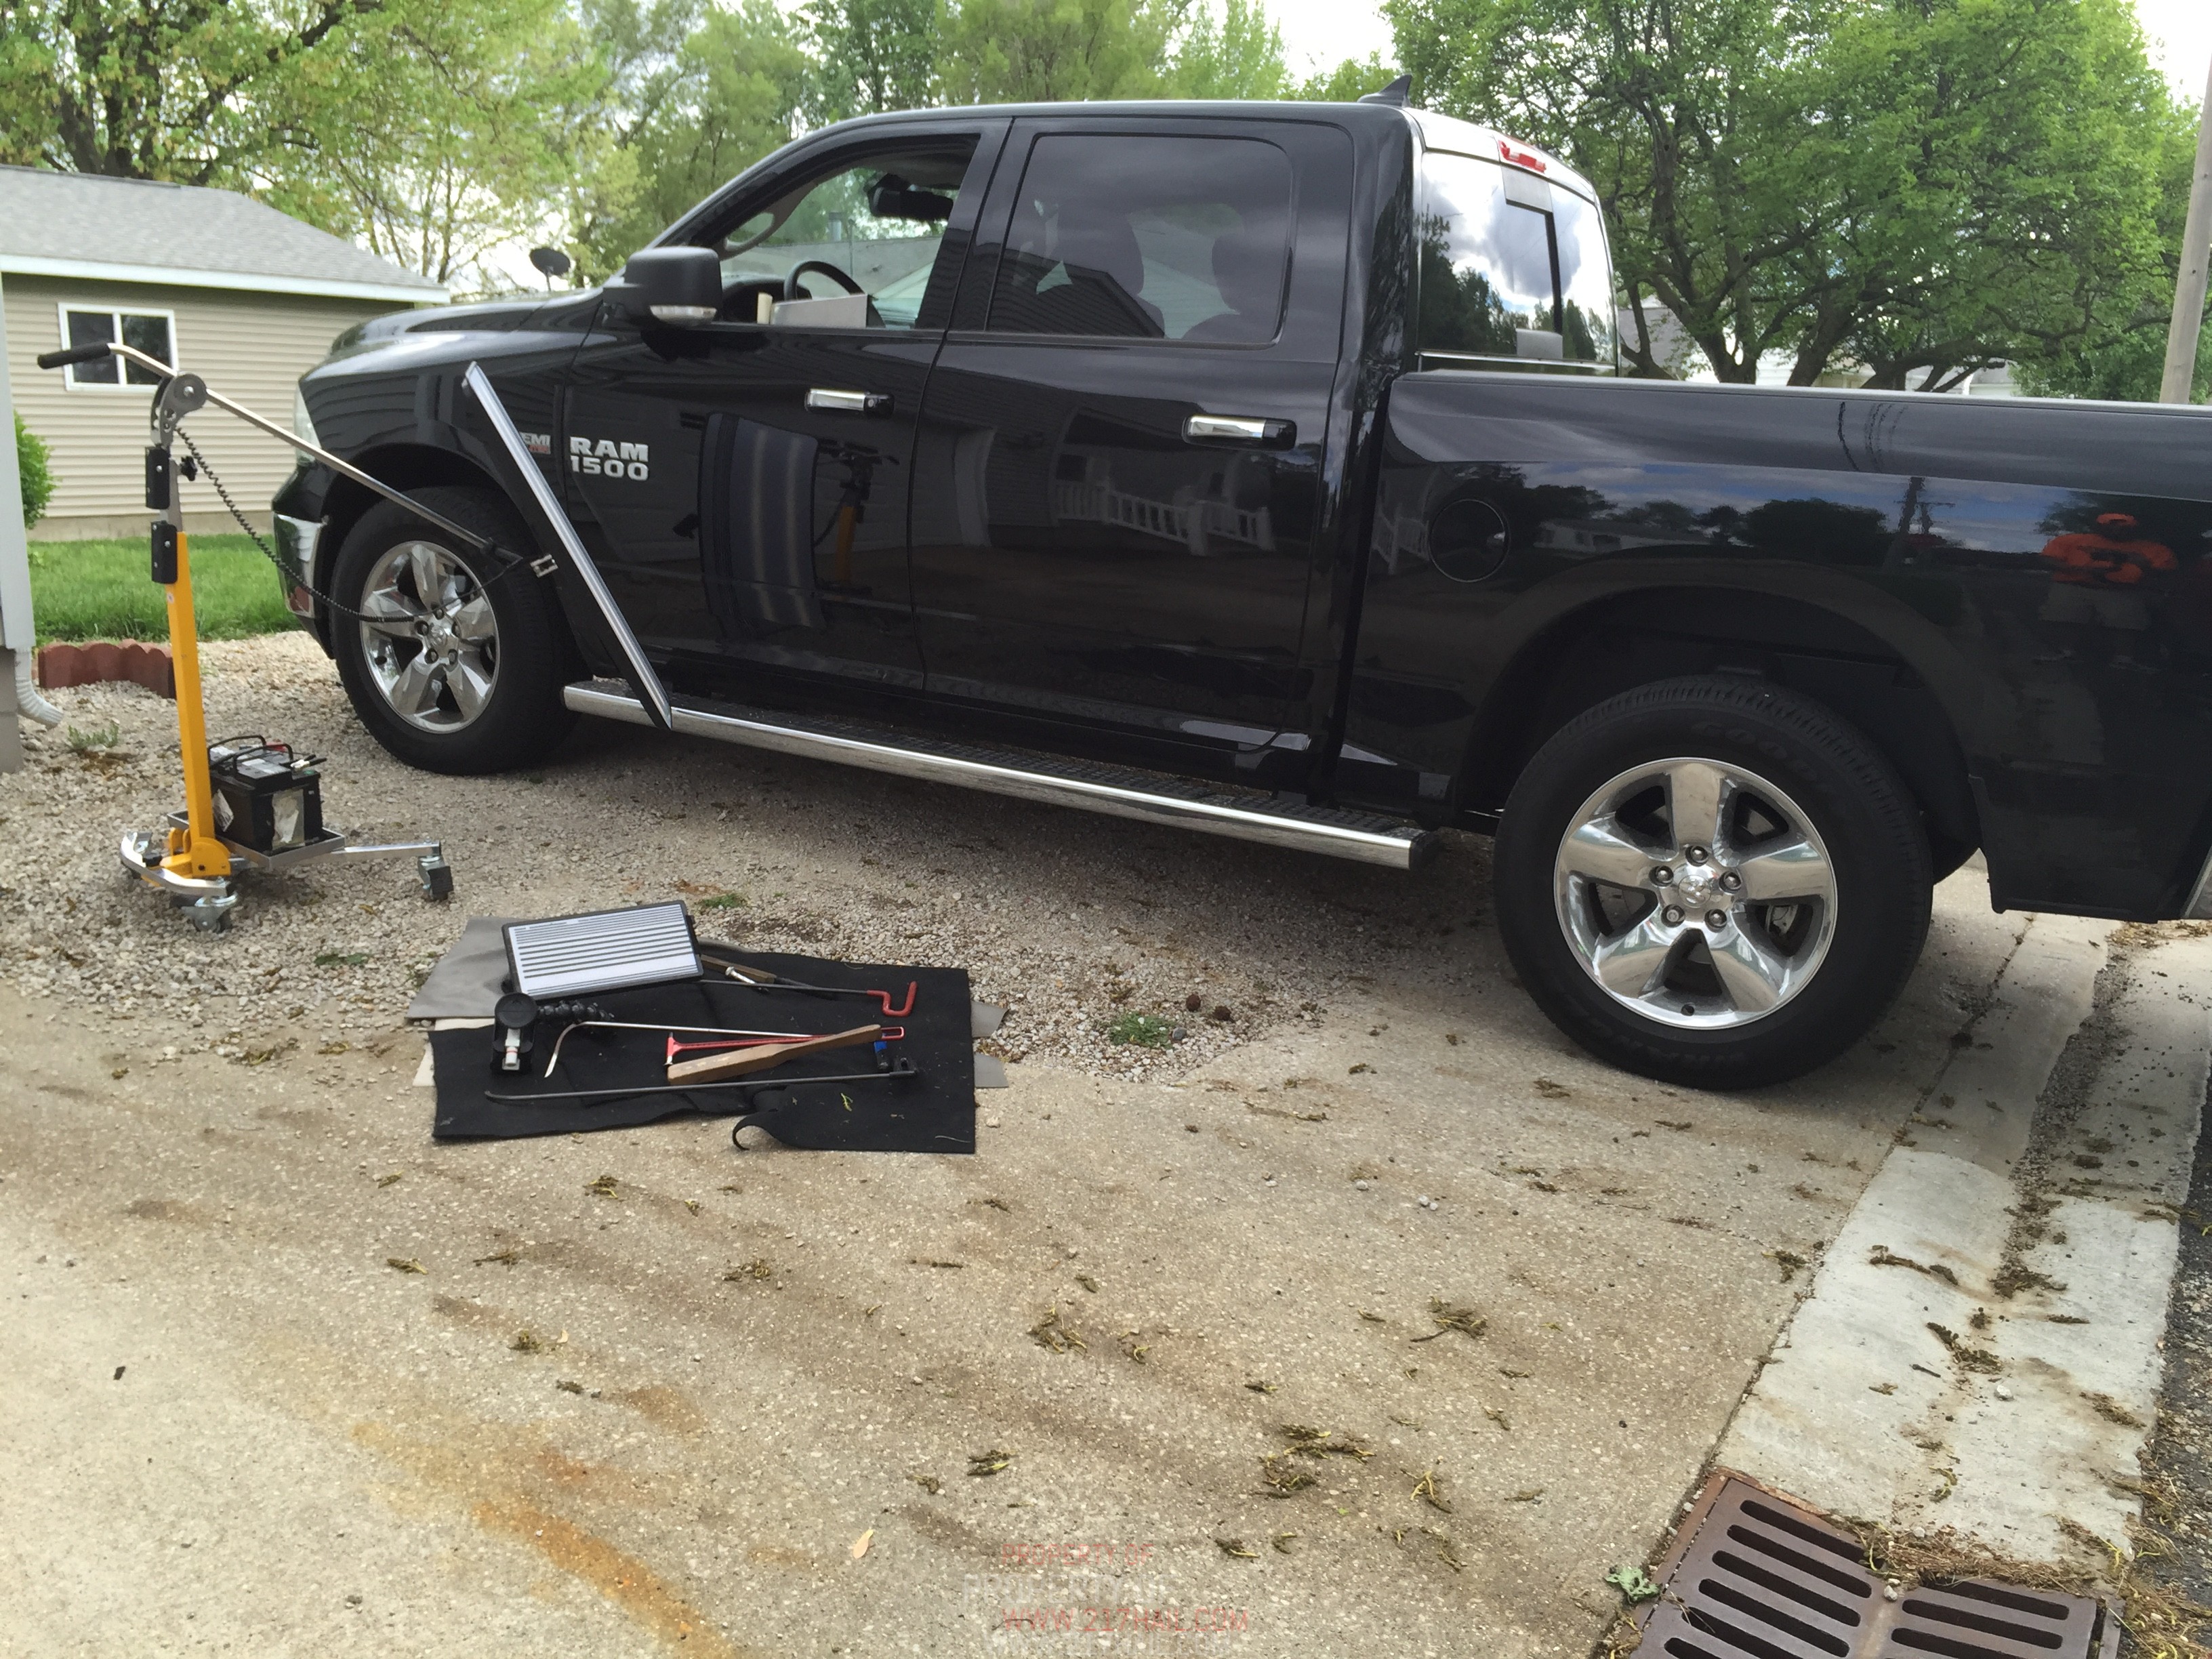 2013 Dodge Ram Drivers Door Dent Removal, Taylorville, IL. Springfield, IL. Mobile Dent repair, http://217dent.com